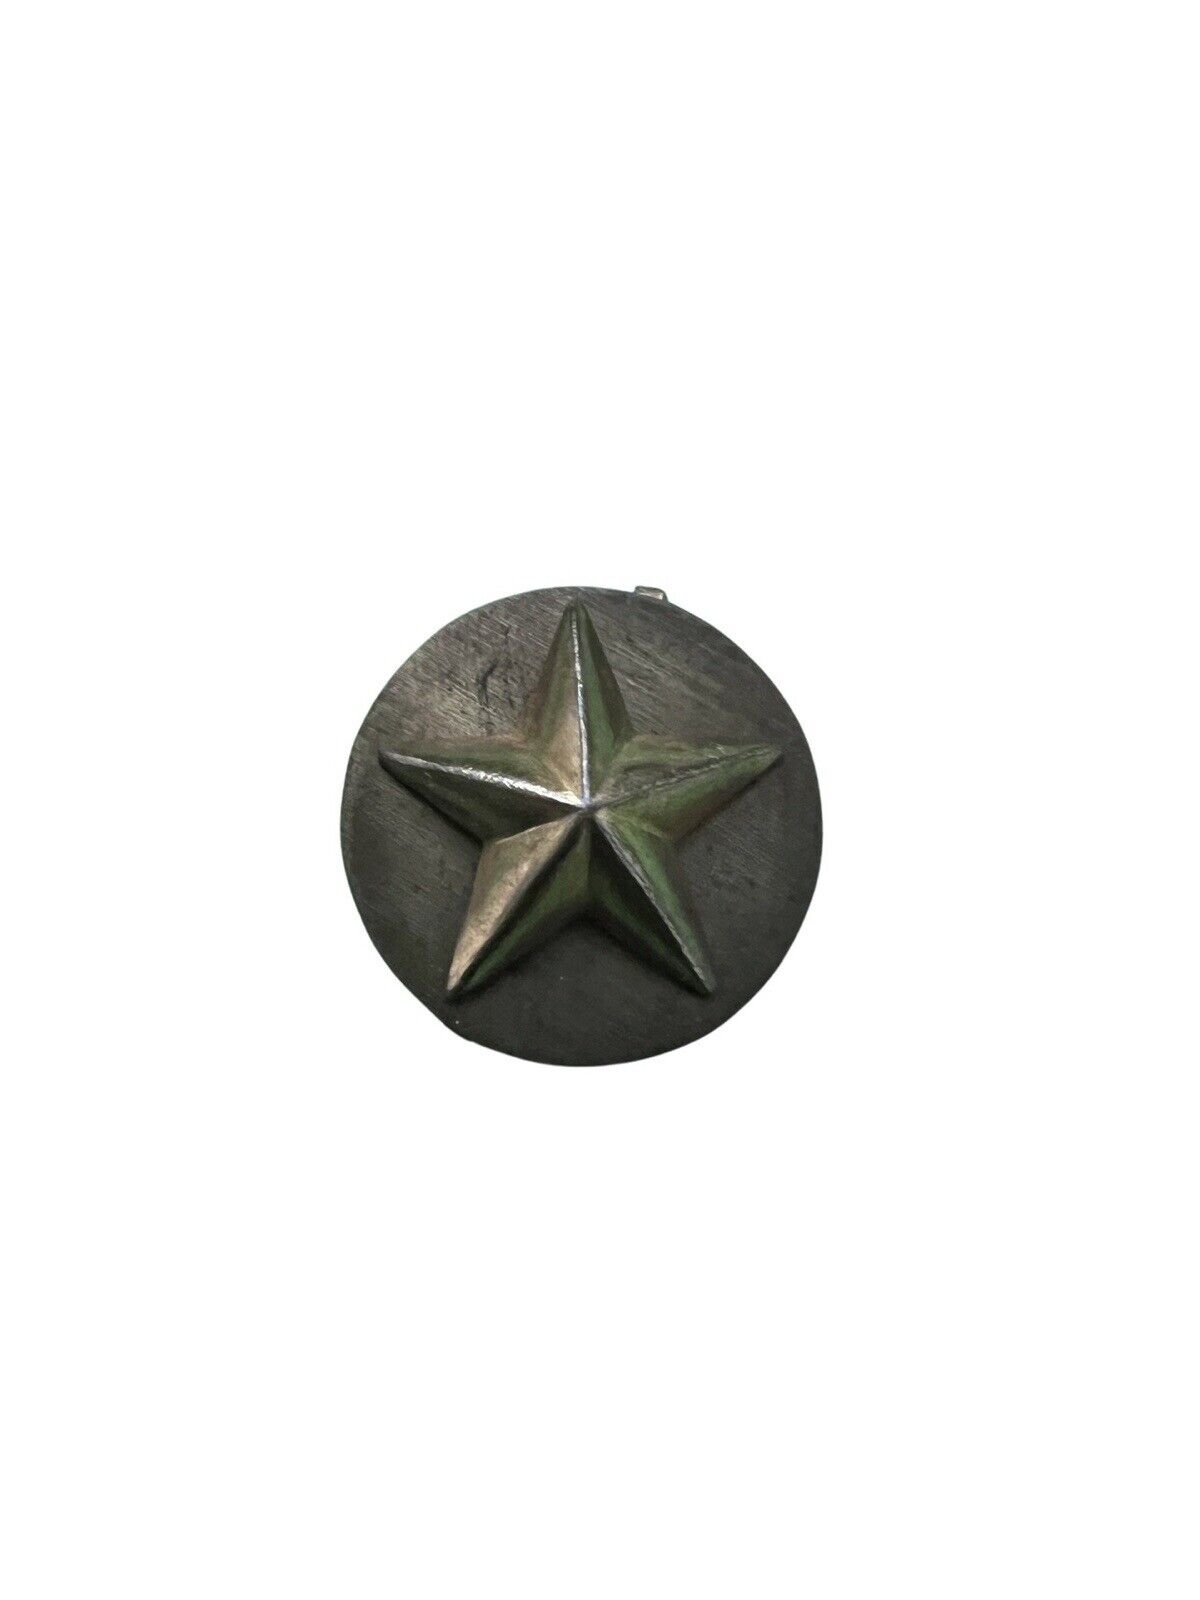 WW2 WWII Japan Japanese Army Military Uniform Cap Hat Lapel Rank Ornament Star